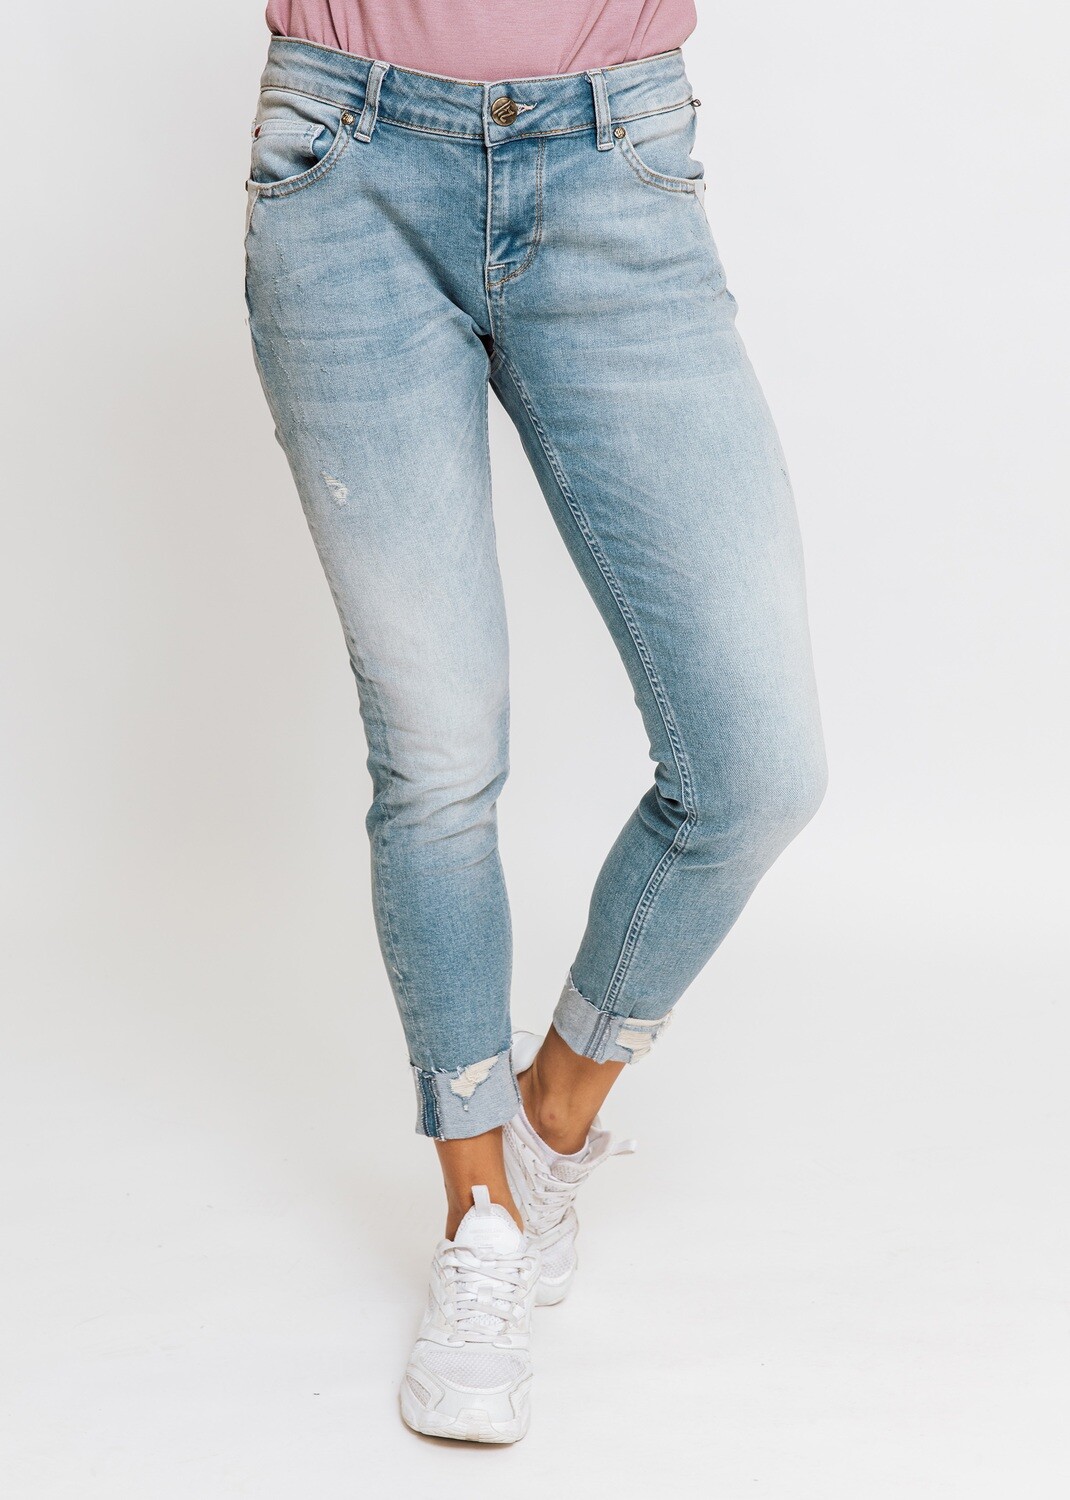 Zhrill jeans